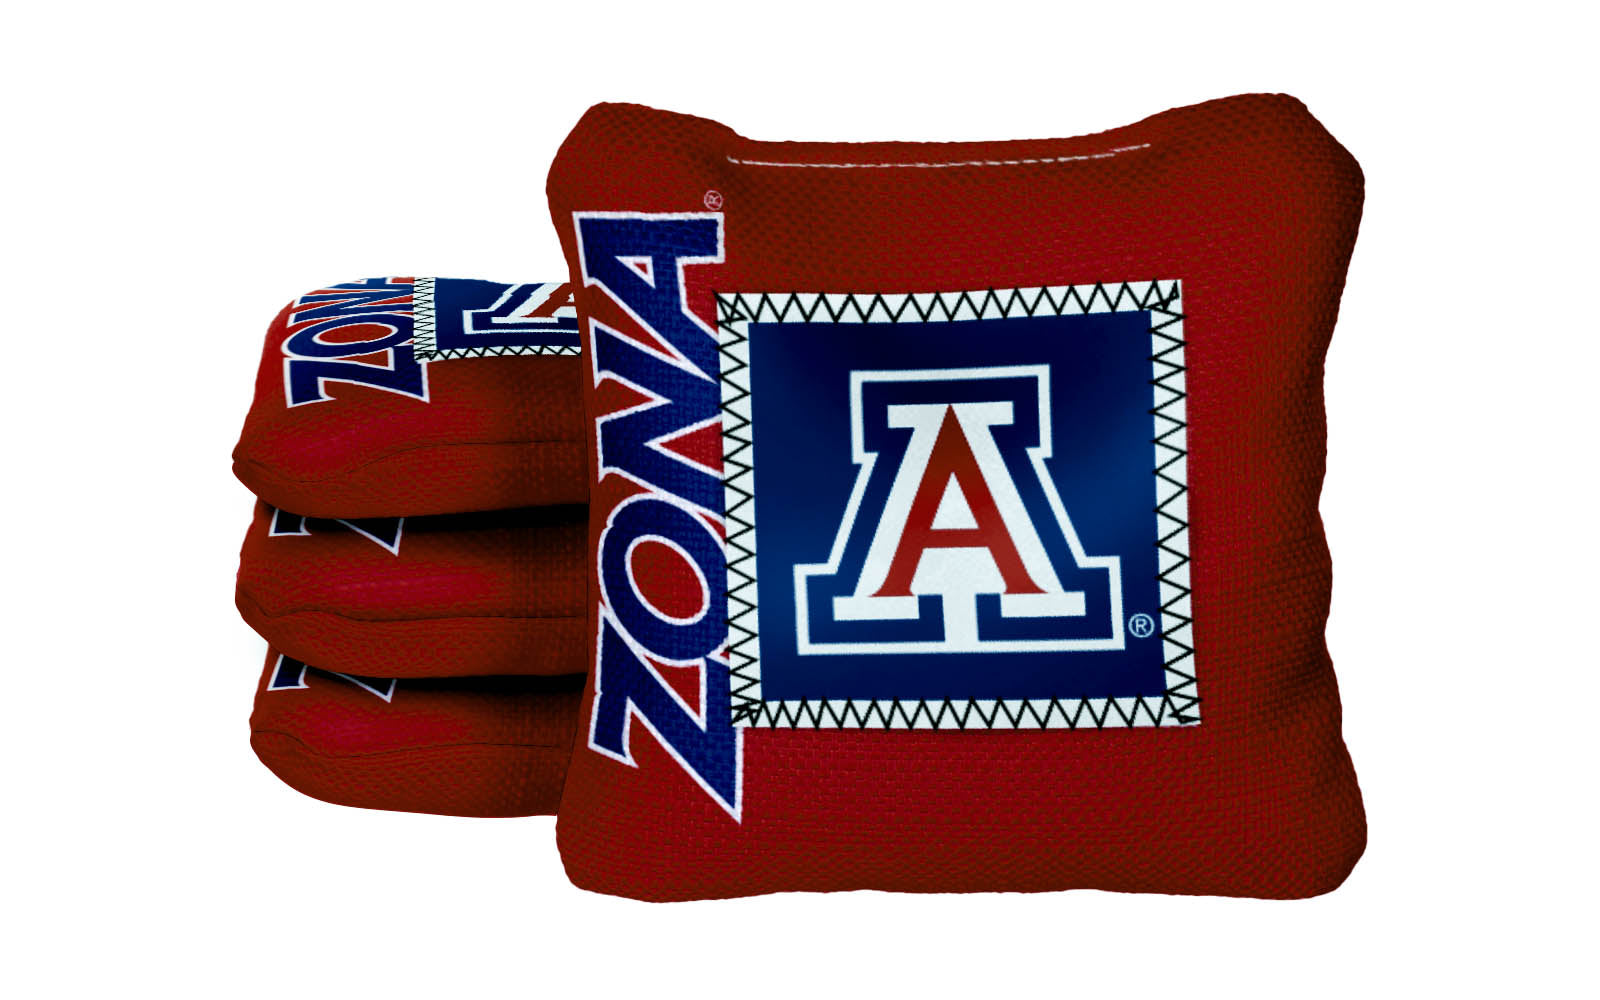 Officially Licensed Collegiate Cornhole Bags - AllCornhole Game Changers Steady 2.0 - Set of 4 - University of Arizona